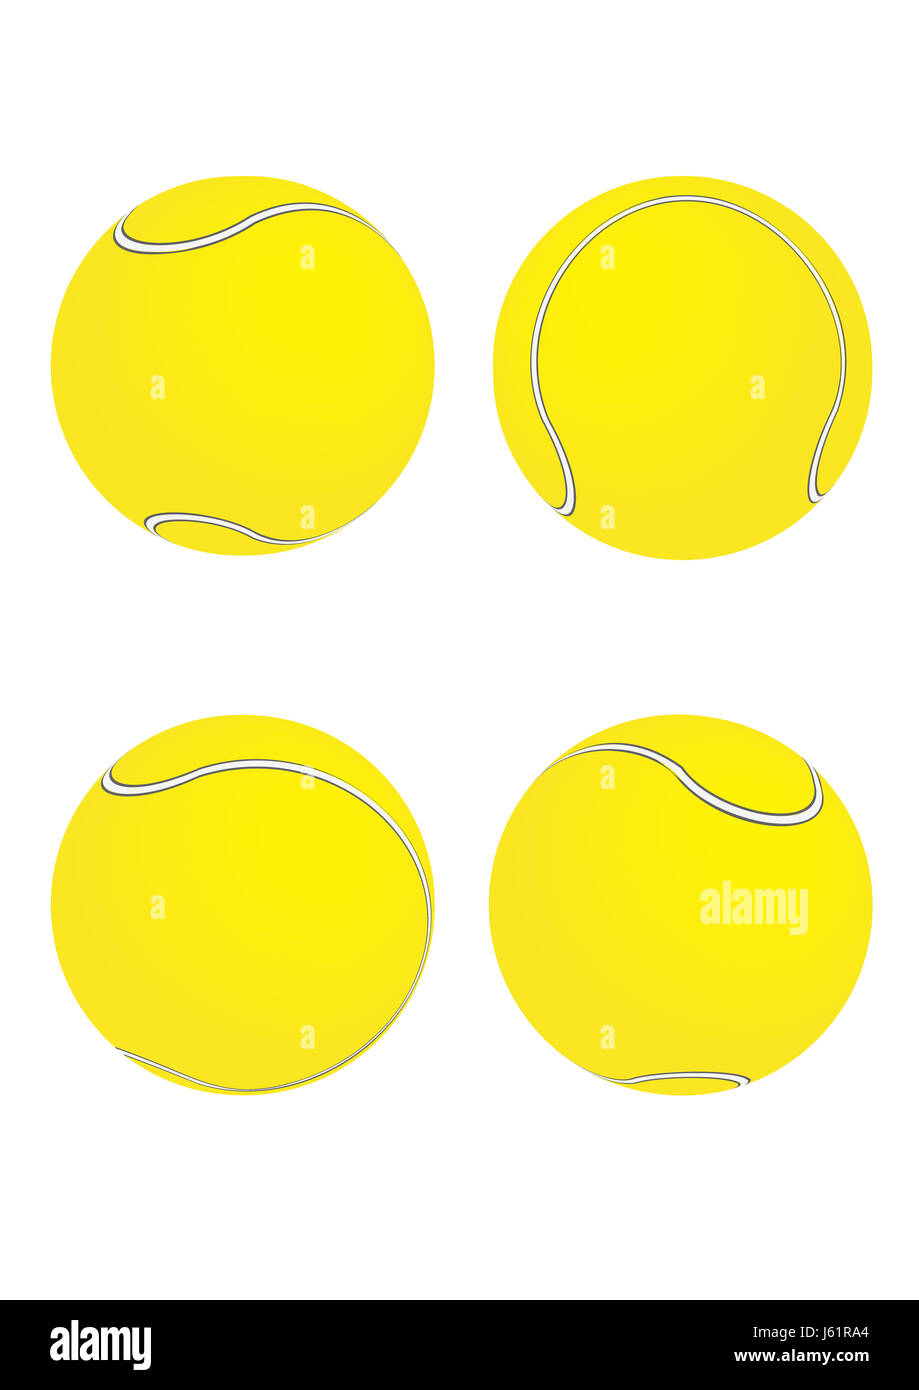 sport sports isolated ball equipment tennis balls yellow sport sports game Stock Photo